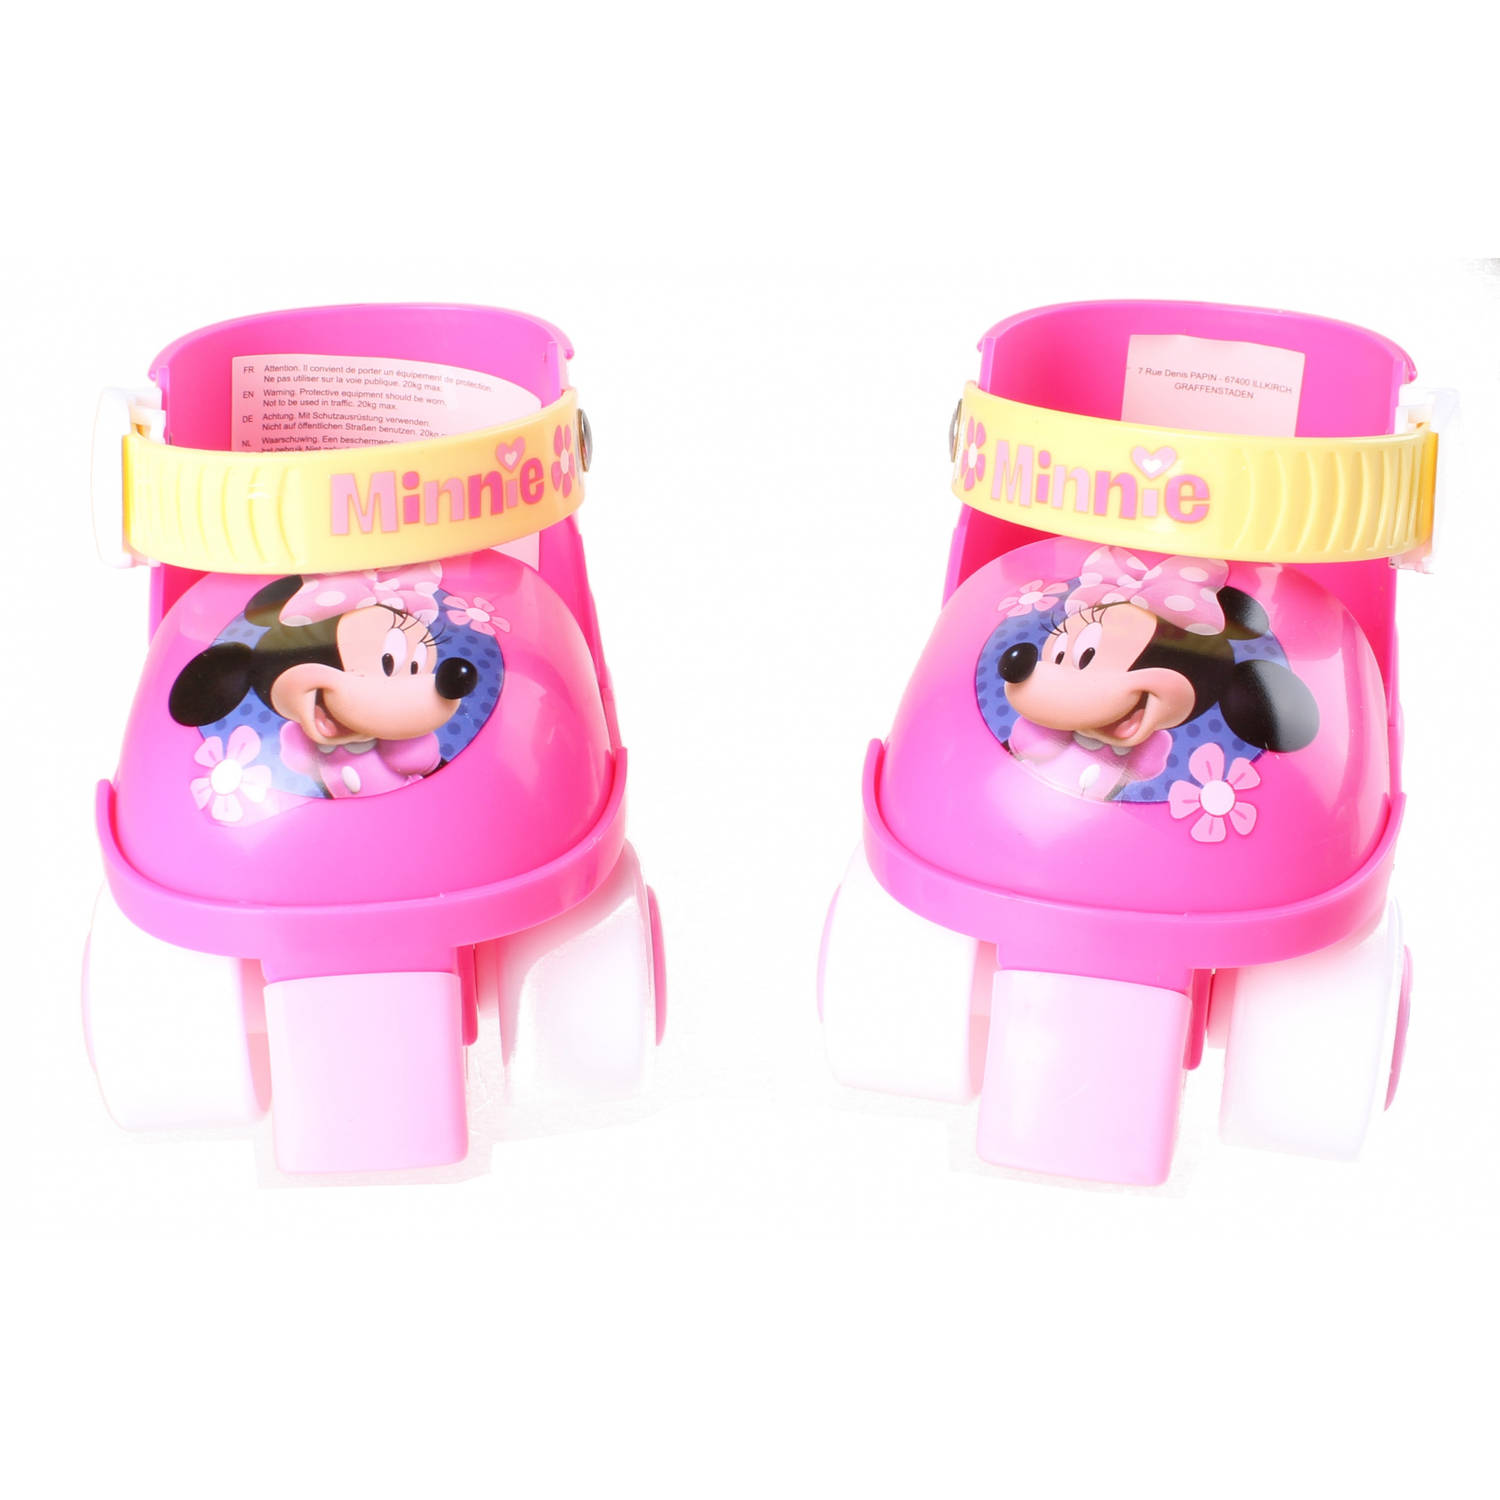 Disney rolschaatsen Minnie Mouse meisjes roze-wit maat 23 27